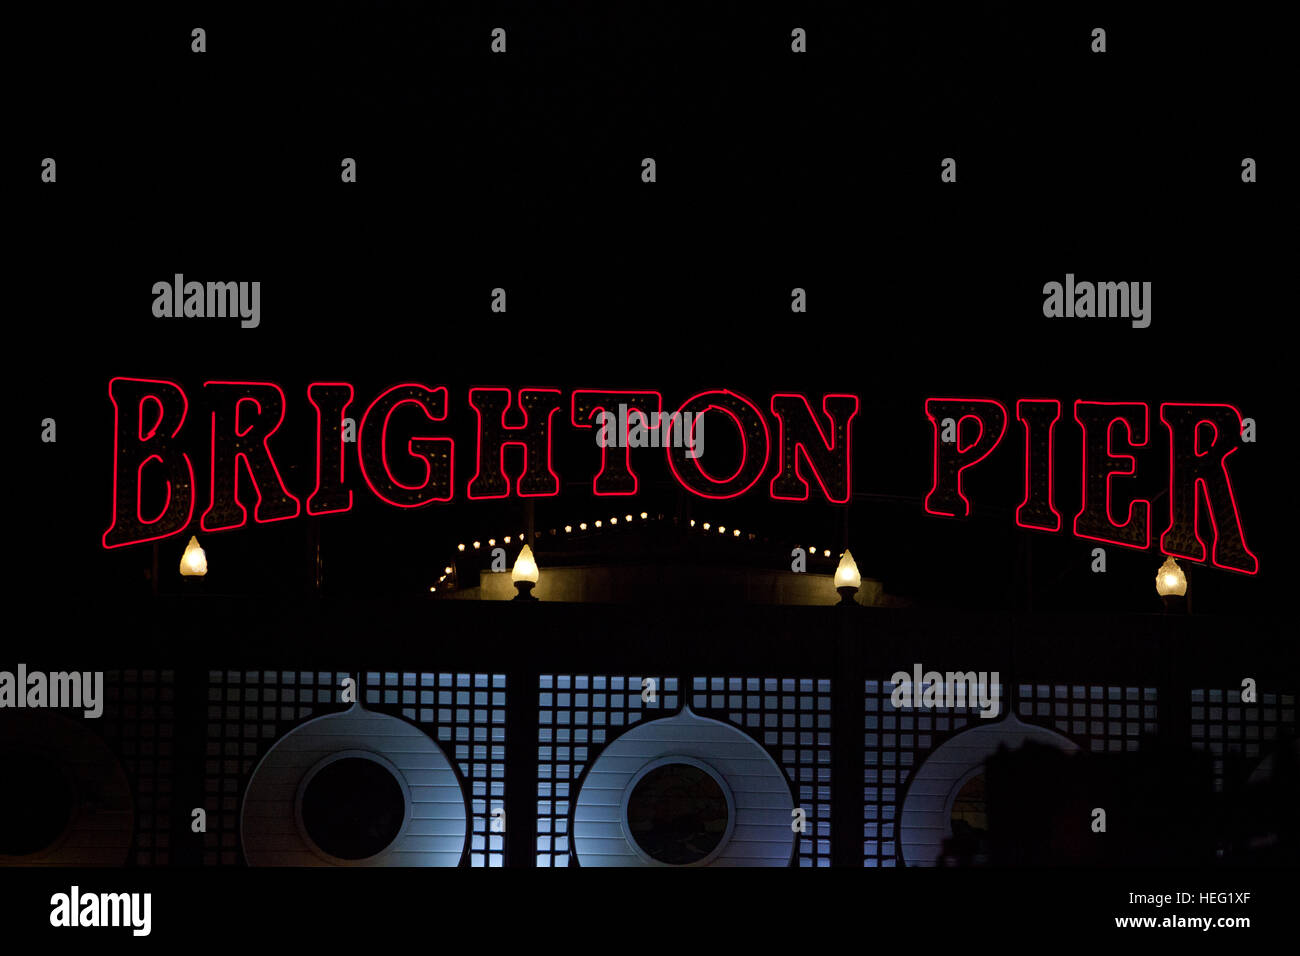 Brighton Pier sign at night Stock Photo